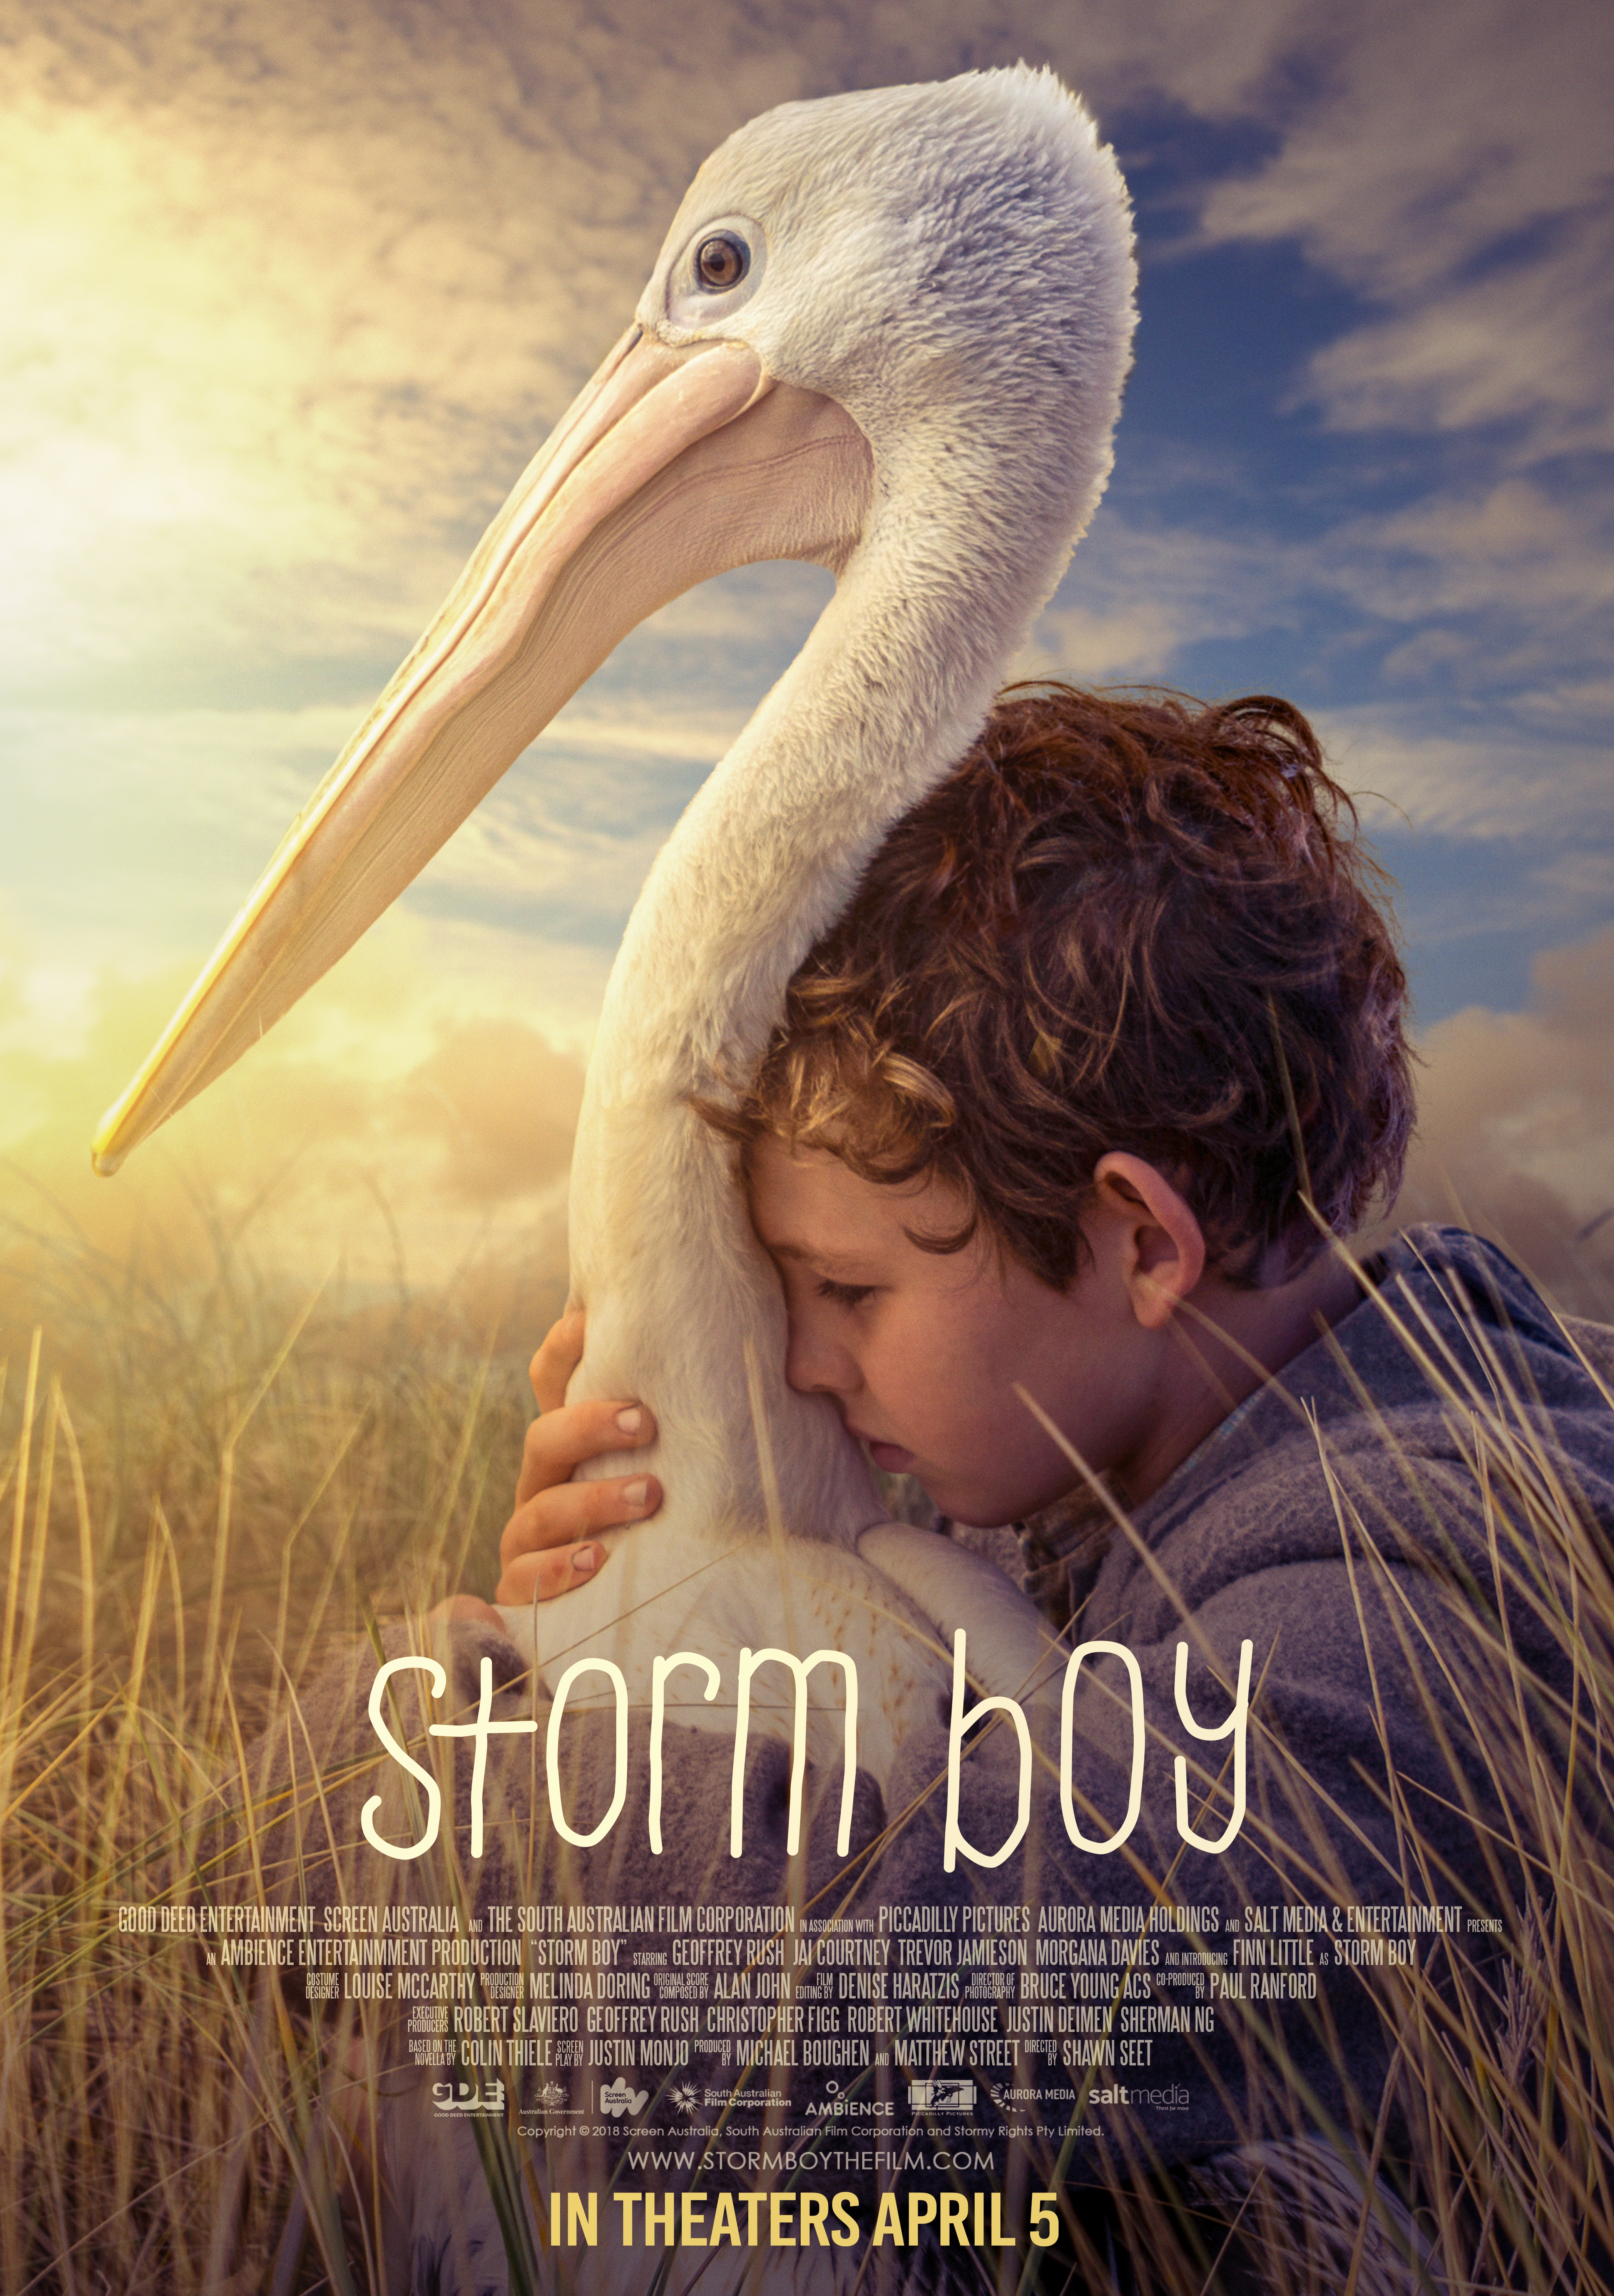 Nonton film Storm Boy layarkaca21 indoxx1 ganool online streaming terbaru